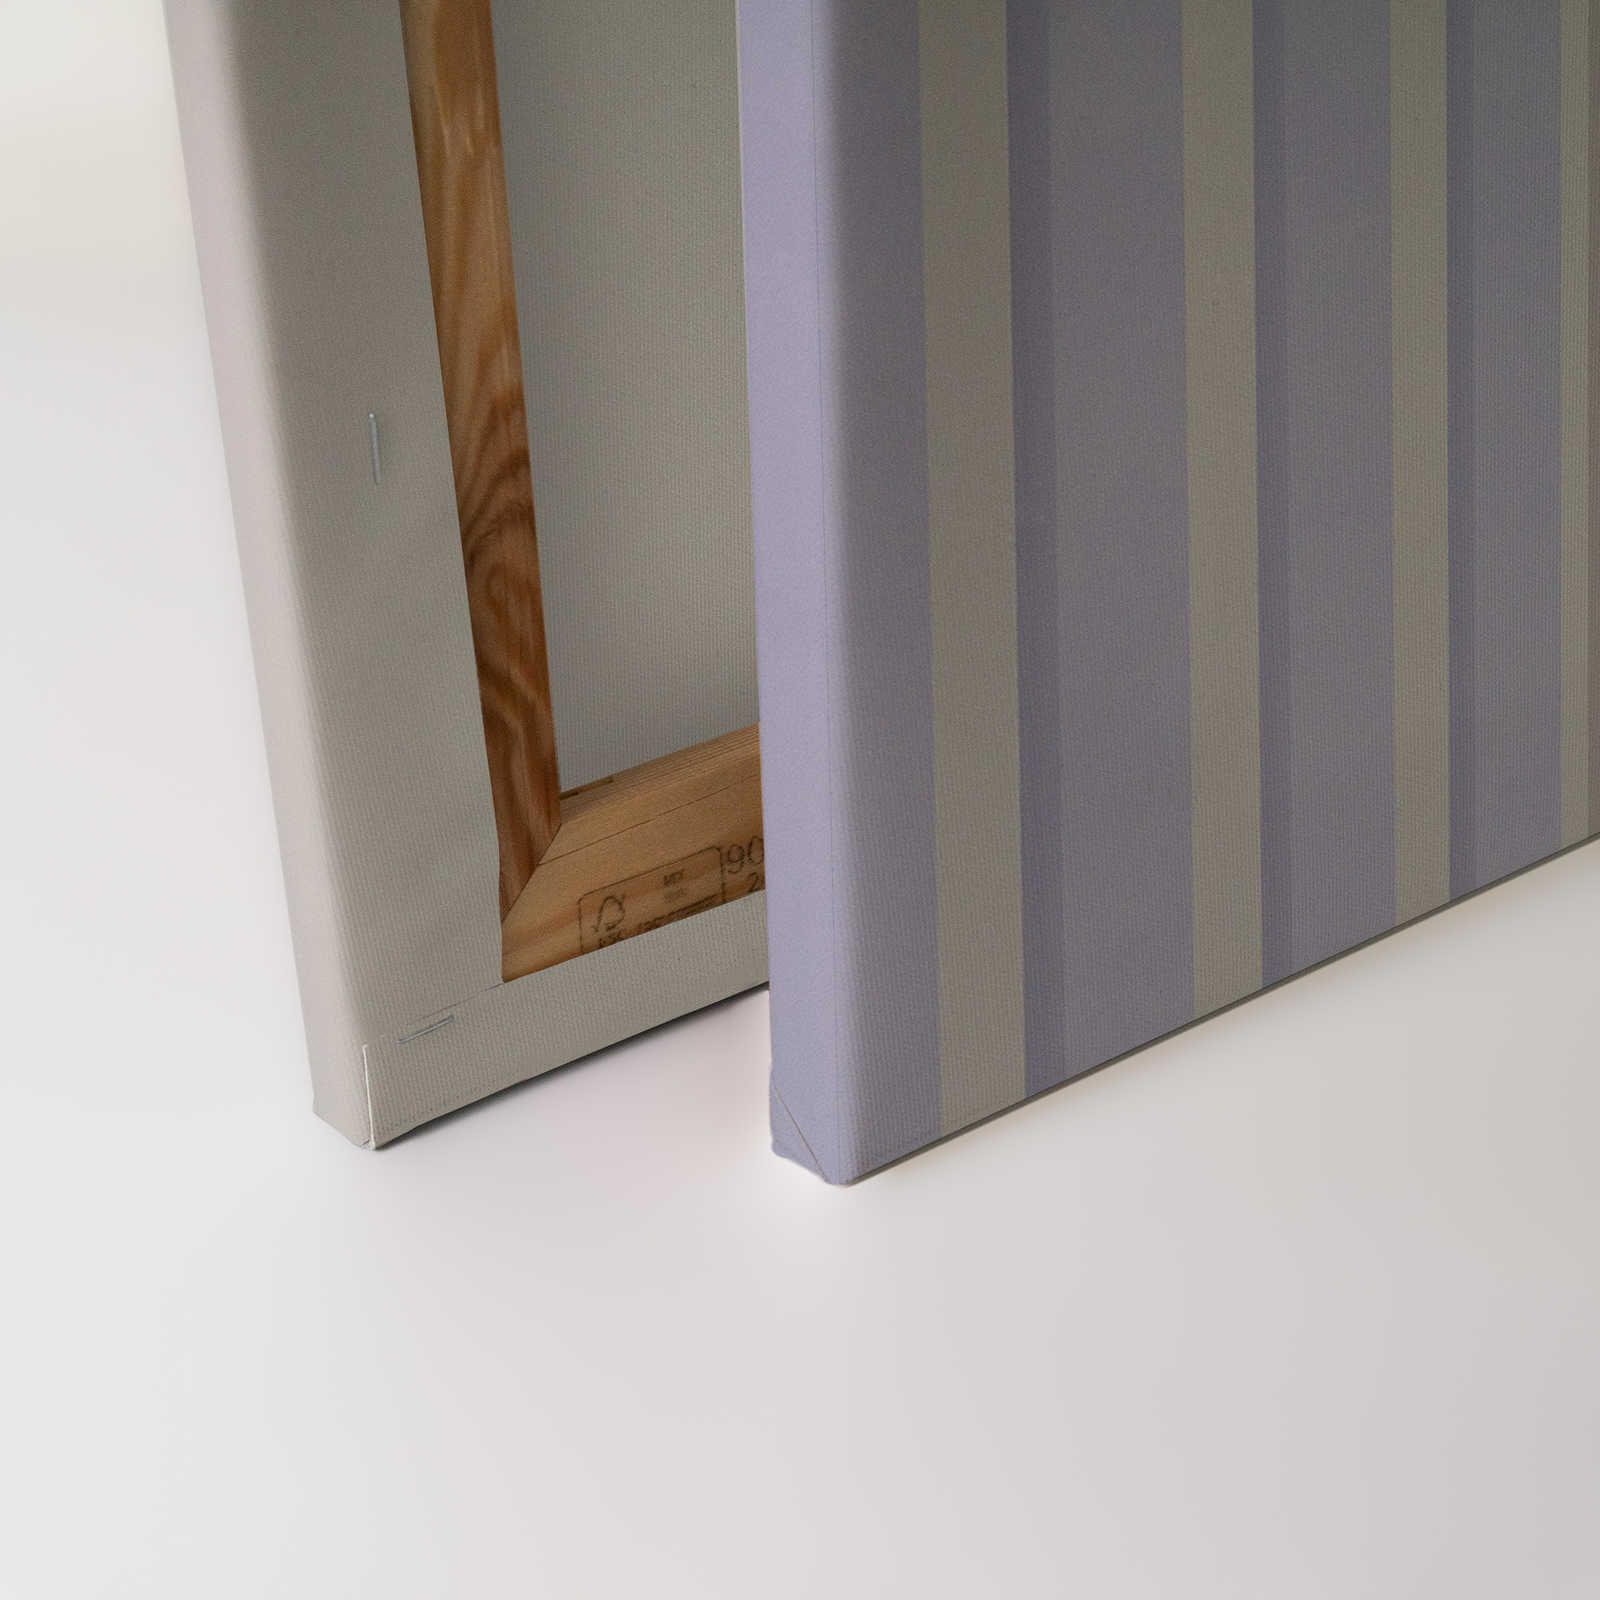             Illusion Room 1 - Canvas painting 3D Stripe Design in Purple & Grey - 0.90 m x 0.60 m
        